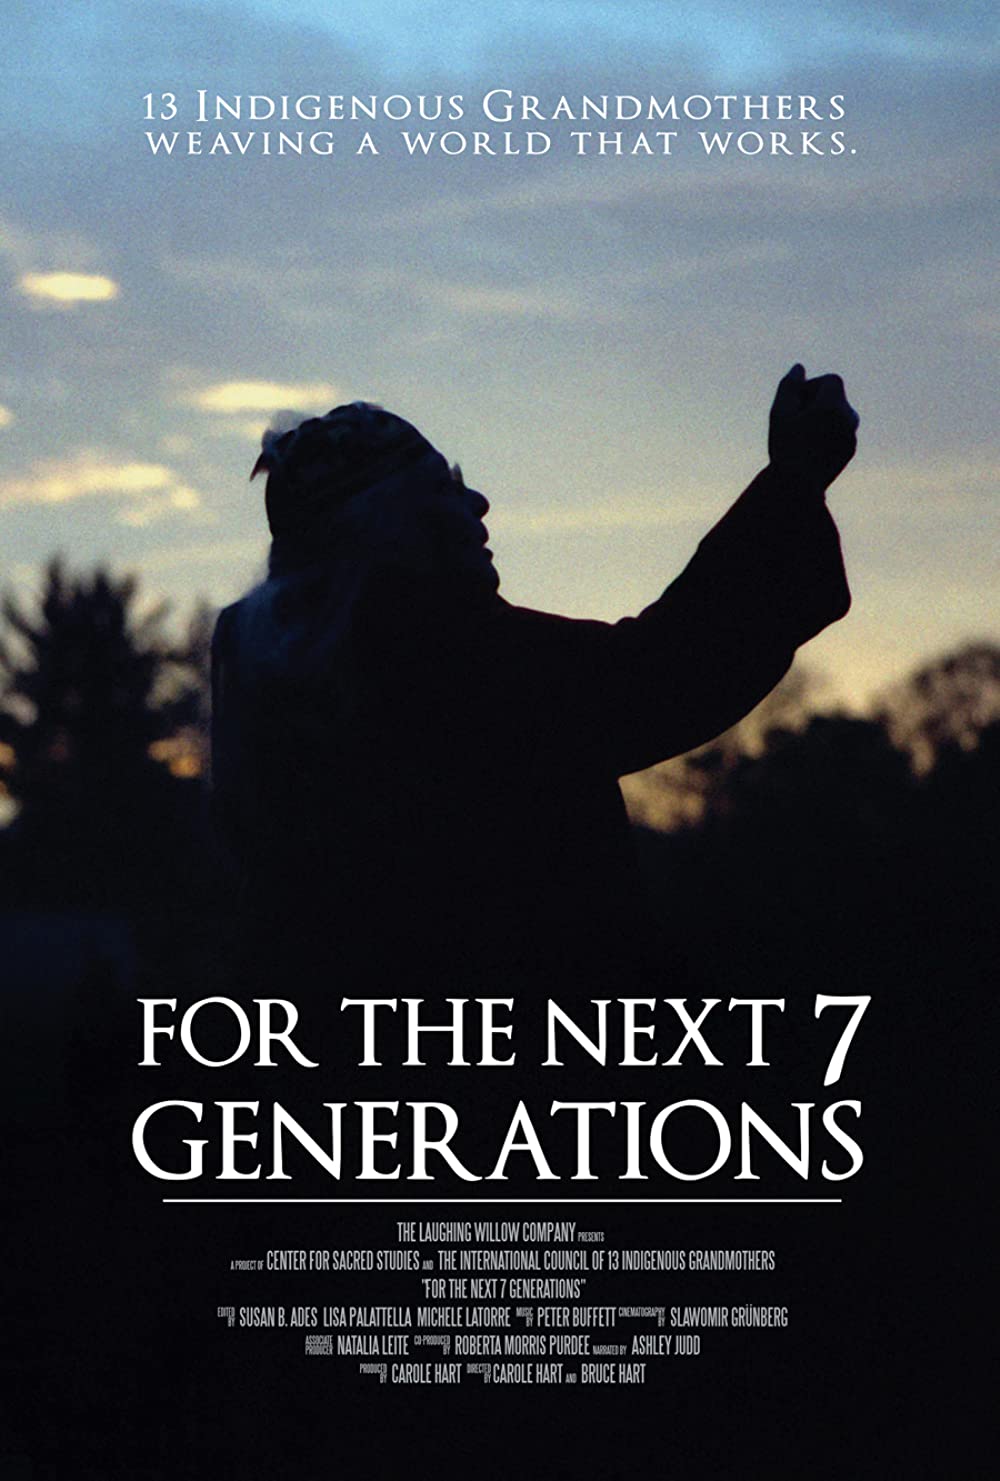 Filmbeschreibung zu For the Next 7 Generations